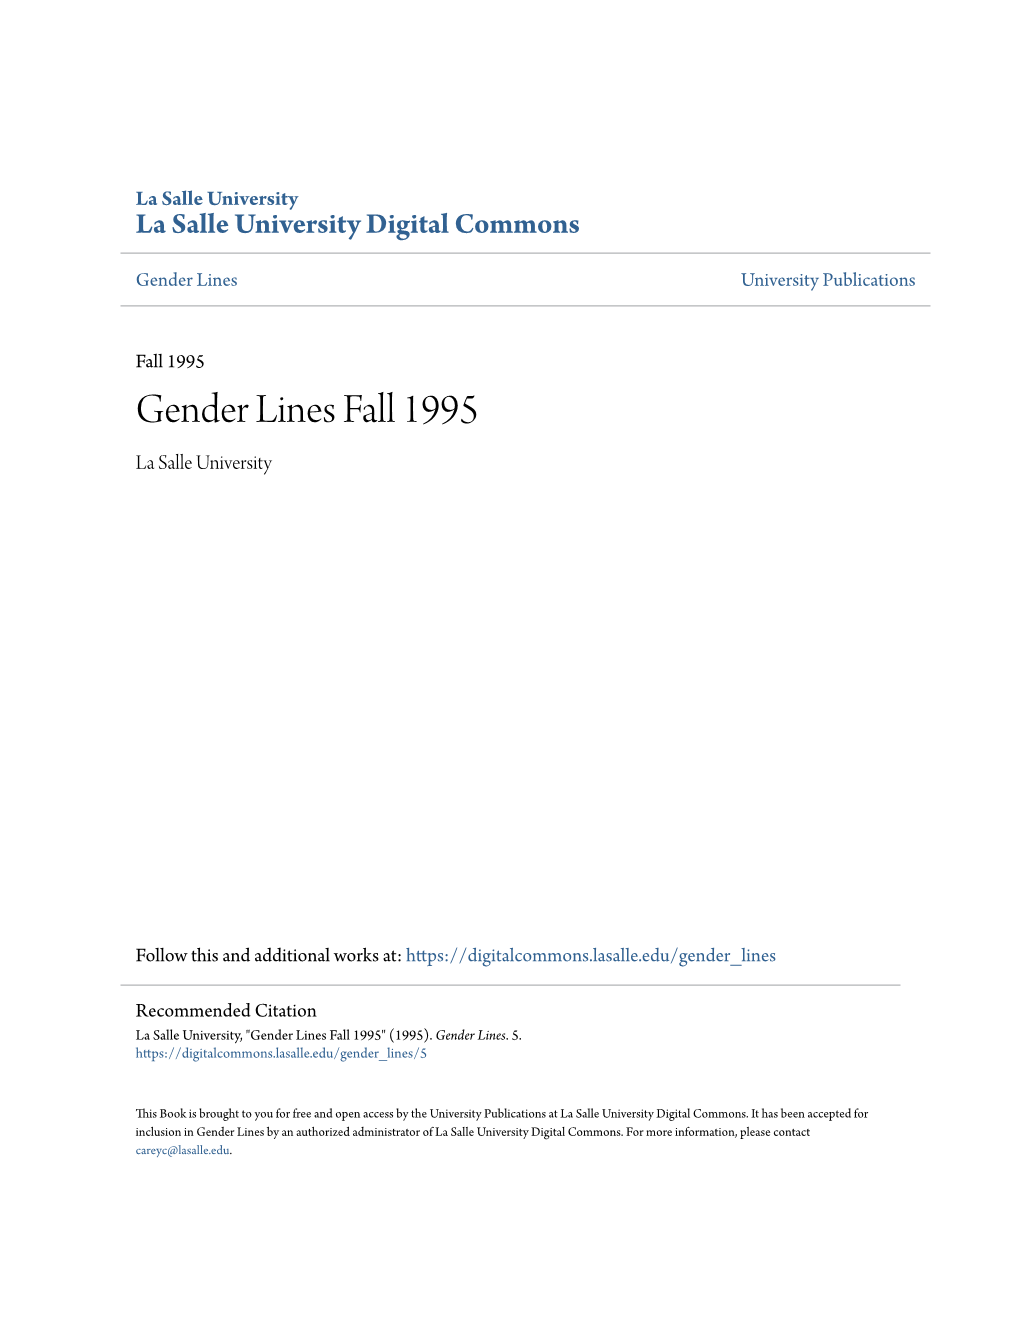 Gender Lines Fall 1995 La Salle University